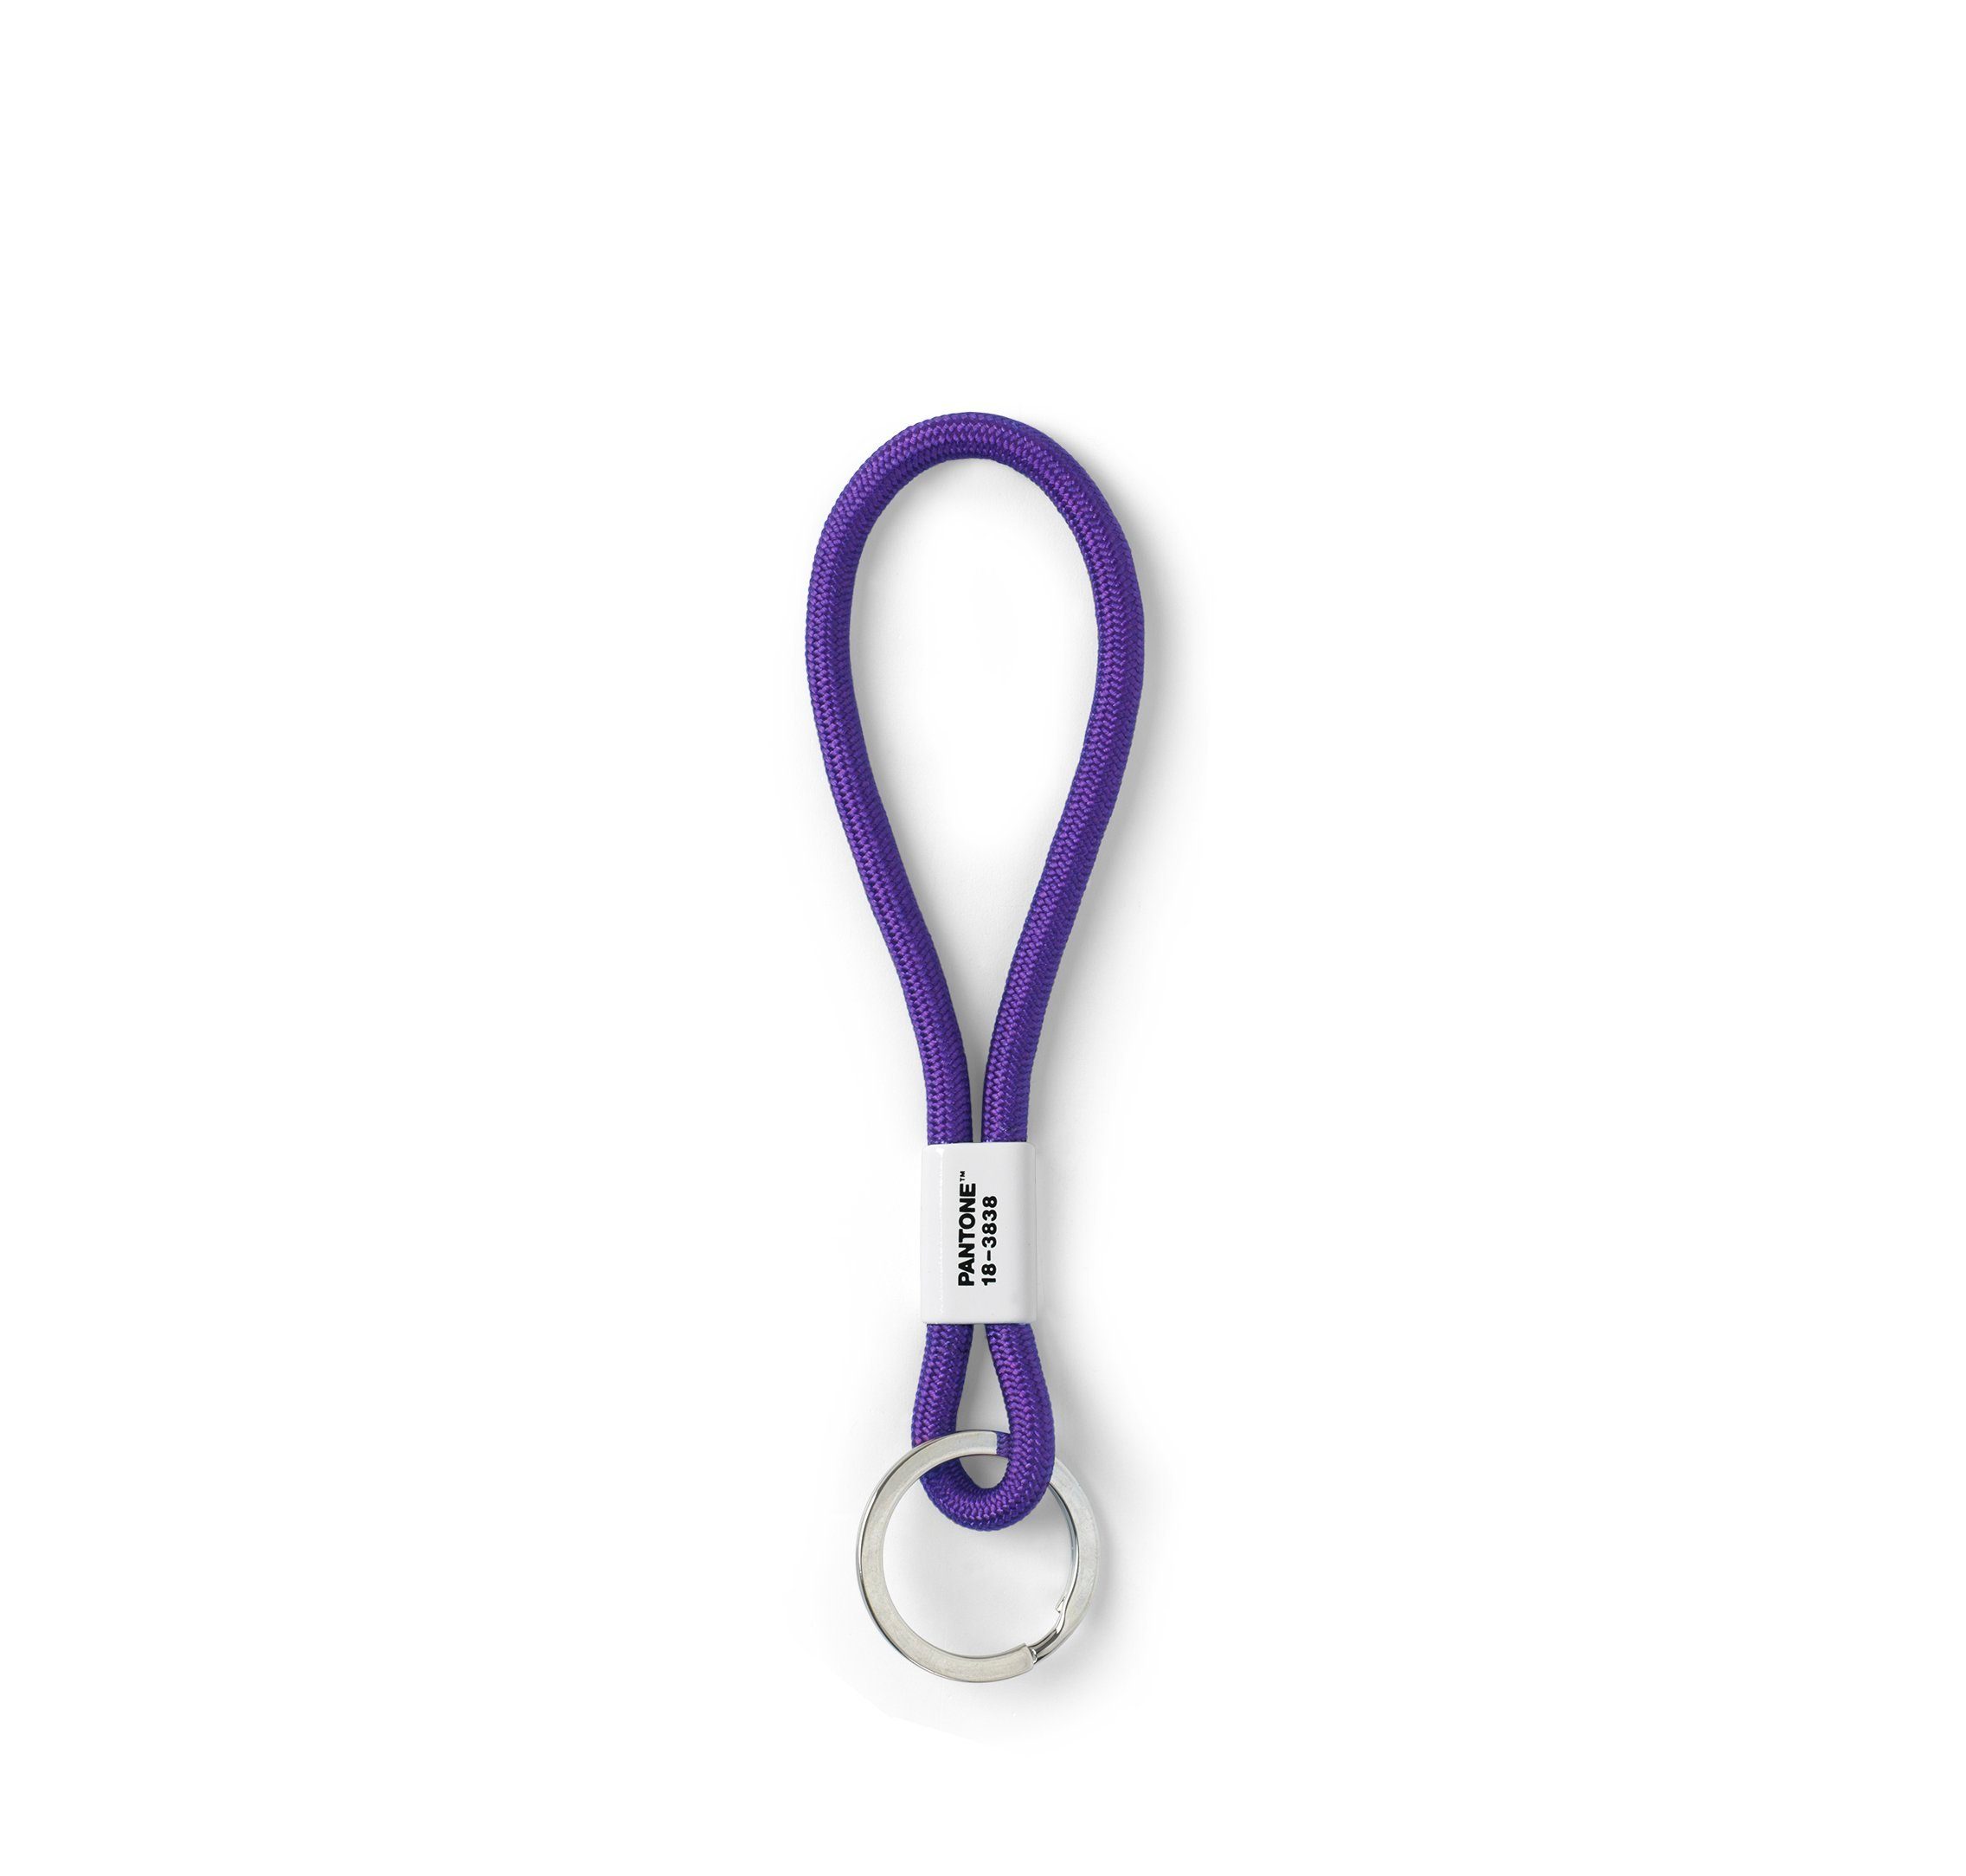 Key Schlüsselanhänger, kurz Chain, Ultra Schlüsselband, Violet PANTONE Design- 18-3838